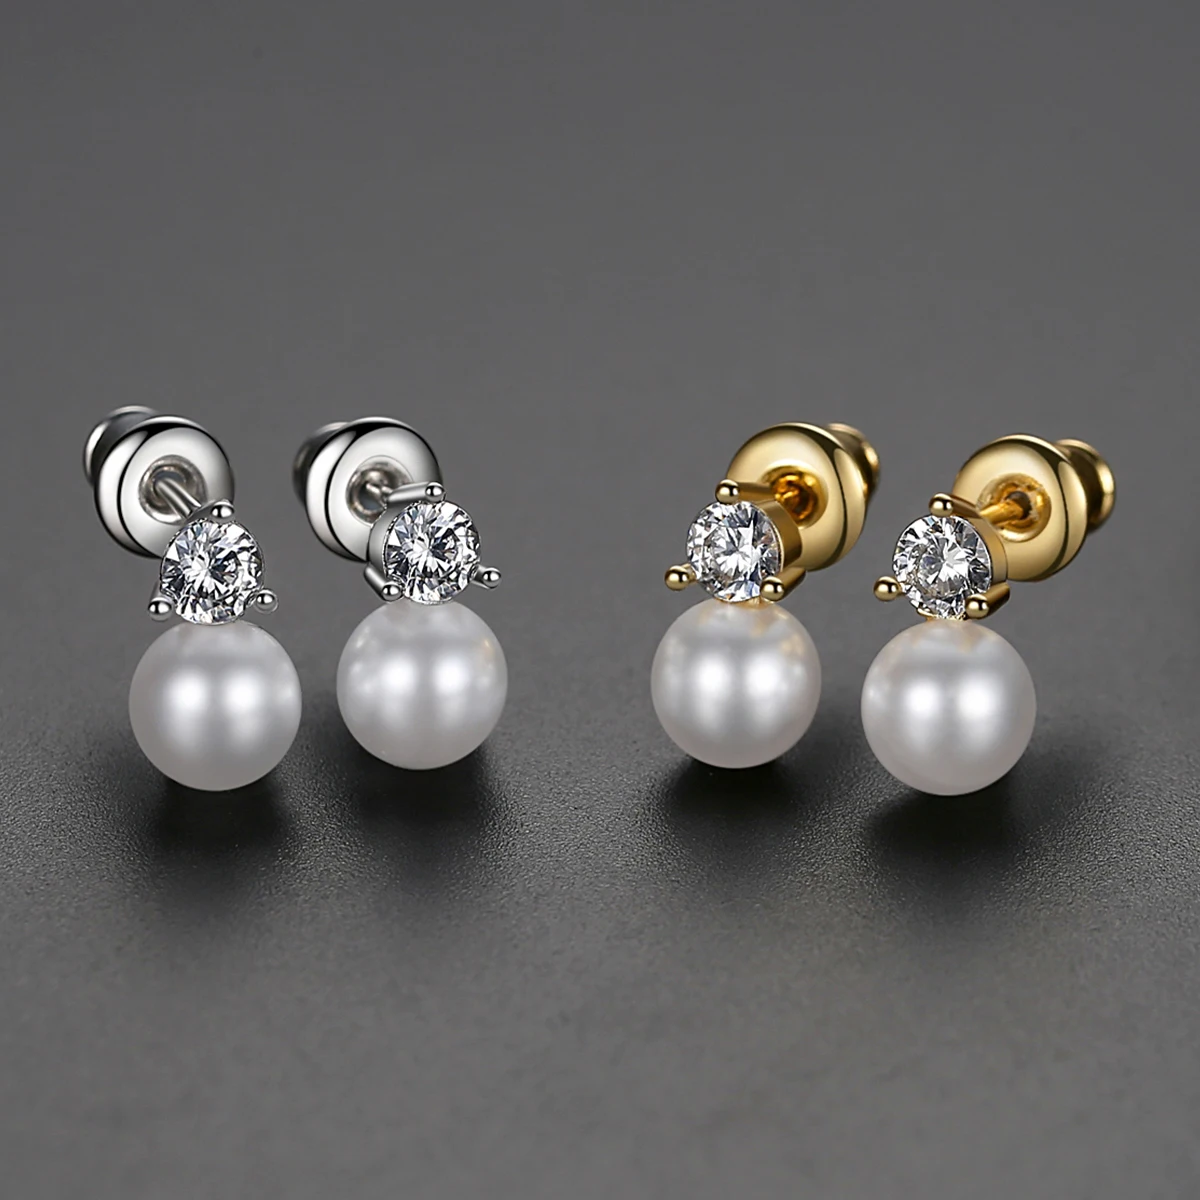 

LUOTEEMI Tiny CZ Earrings White Imitation Pearl Stud Earrings for Girls Cute Korean Simple Earring Stud